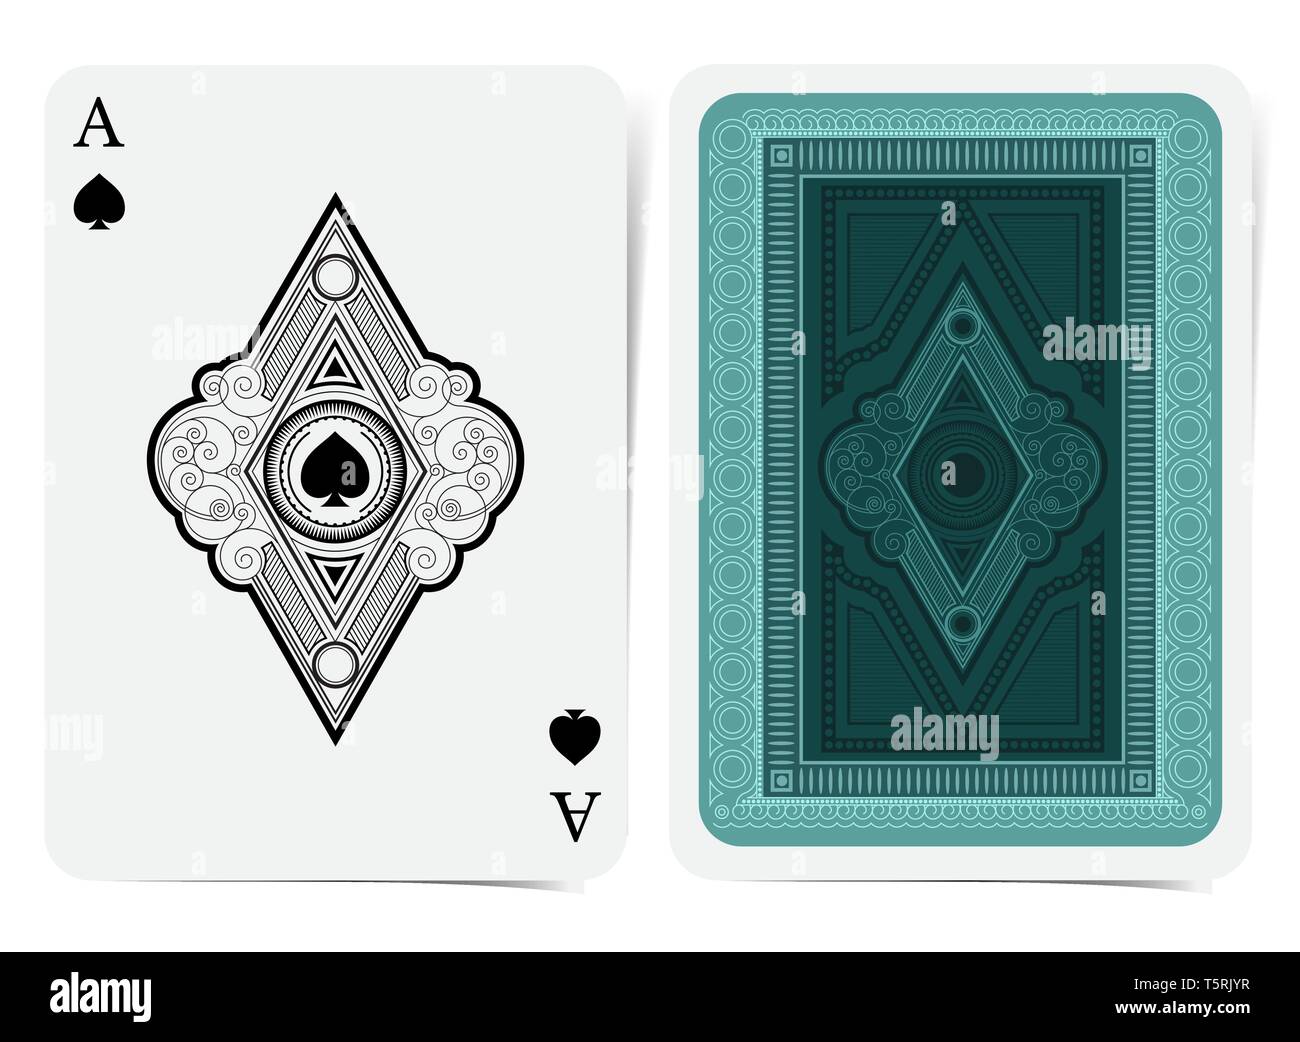 ace of spades card designs